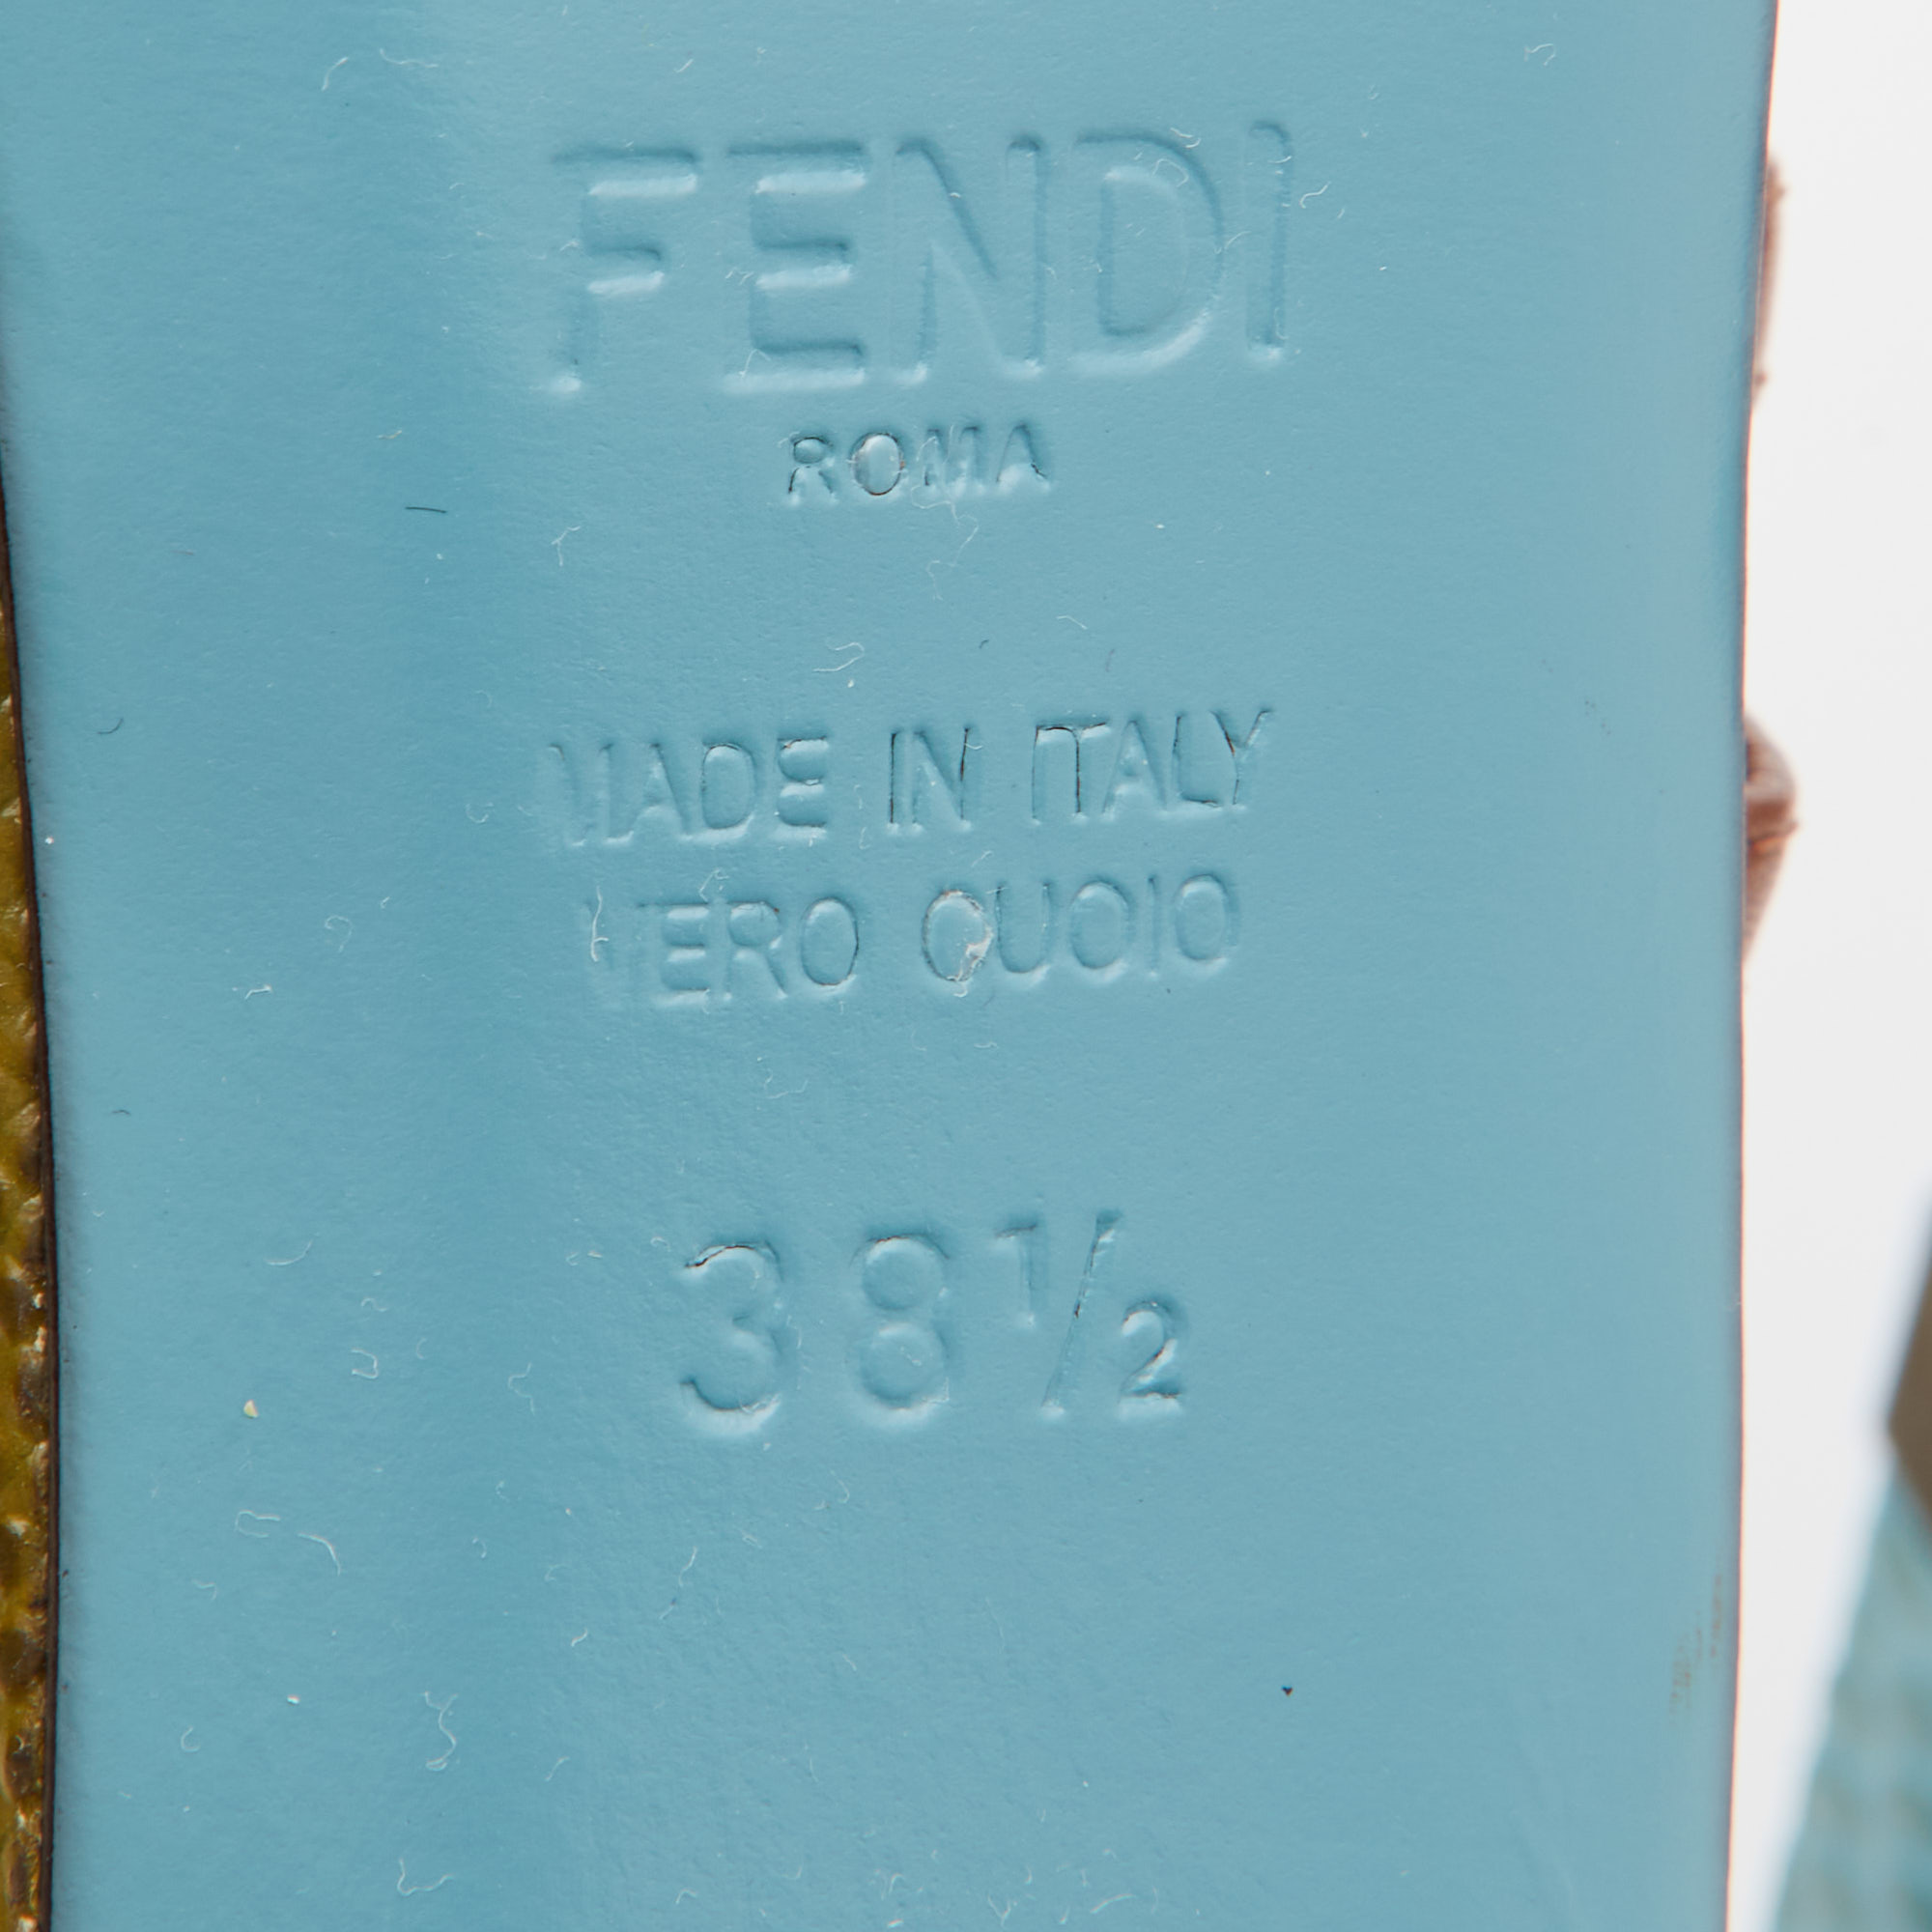 Fendi Brown Leather T-Bar Strappy Platform Sandals Size 38.5